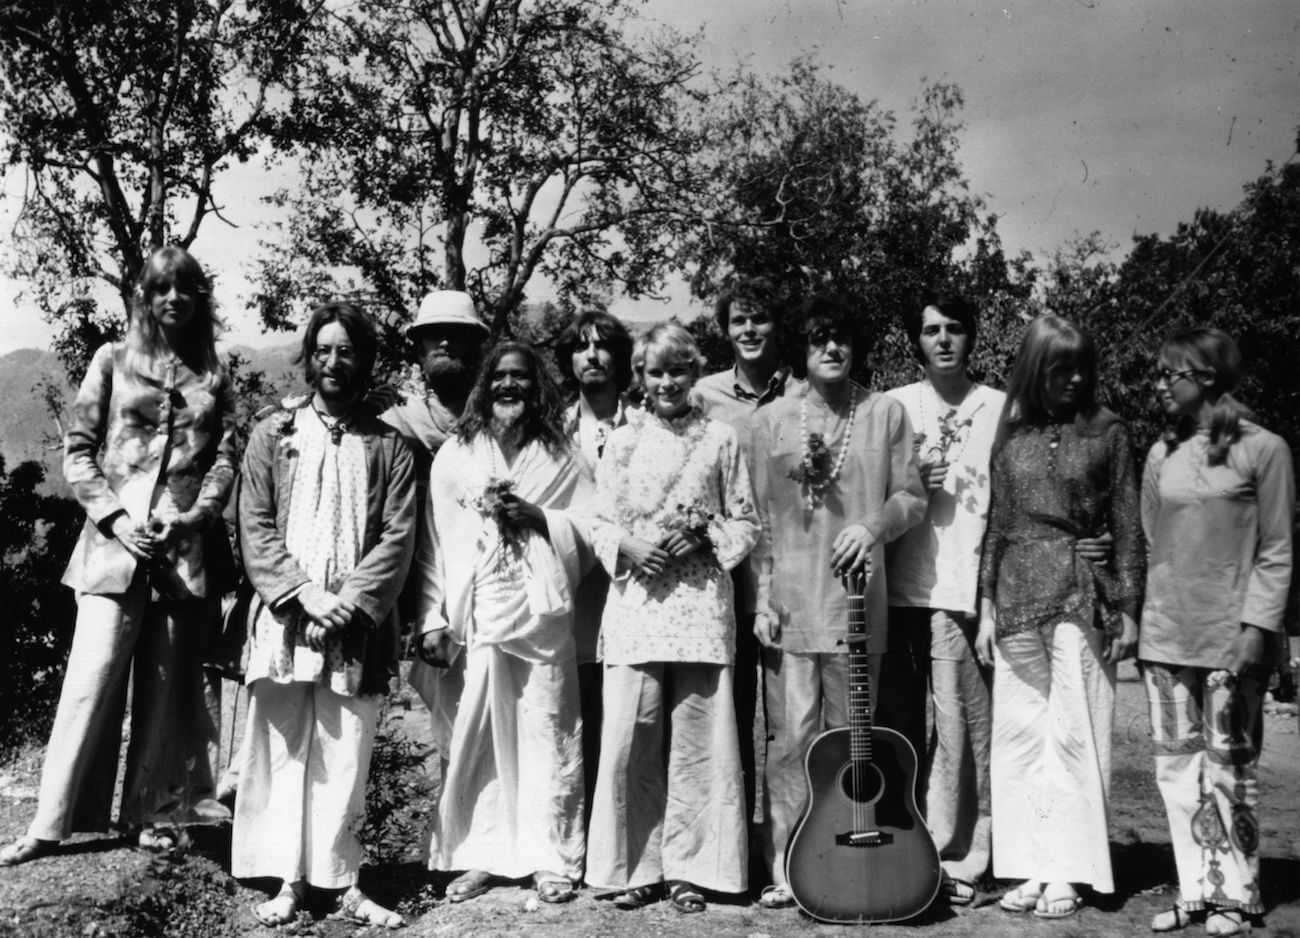 Paul McCartney, The Beatles, Donovan, and the Maharishi Mahesh Yogi in India, 1968.